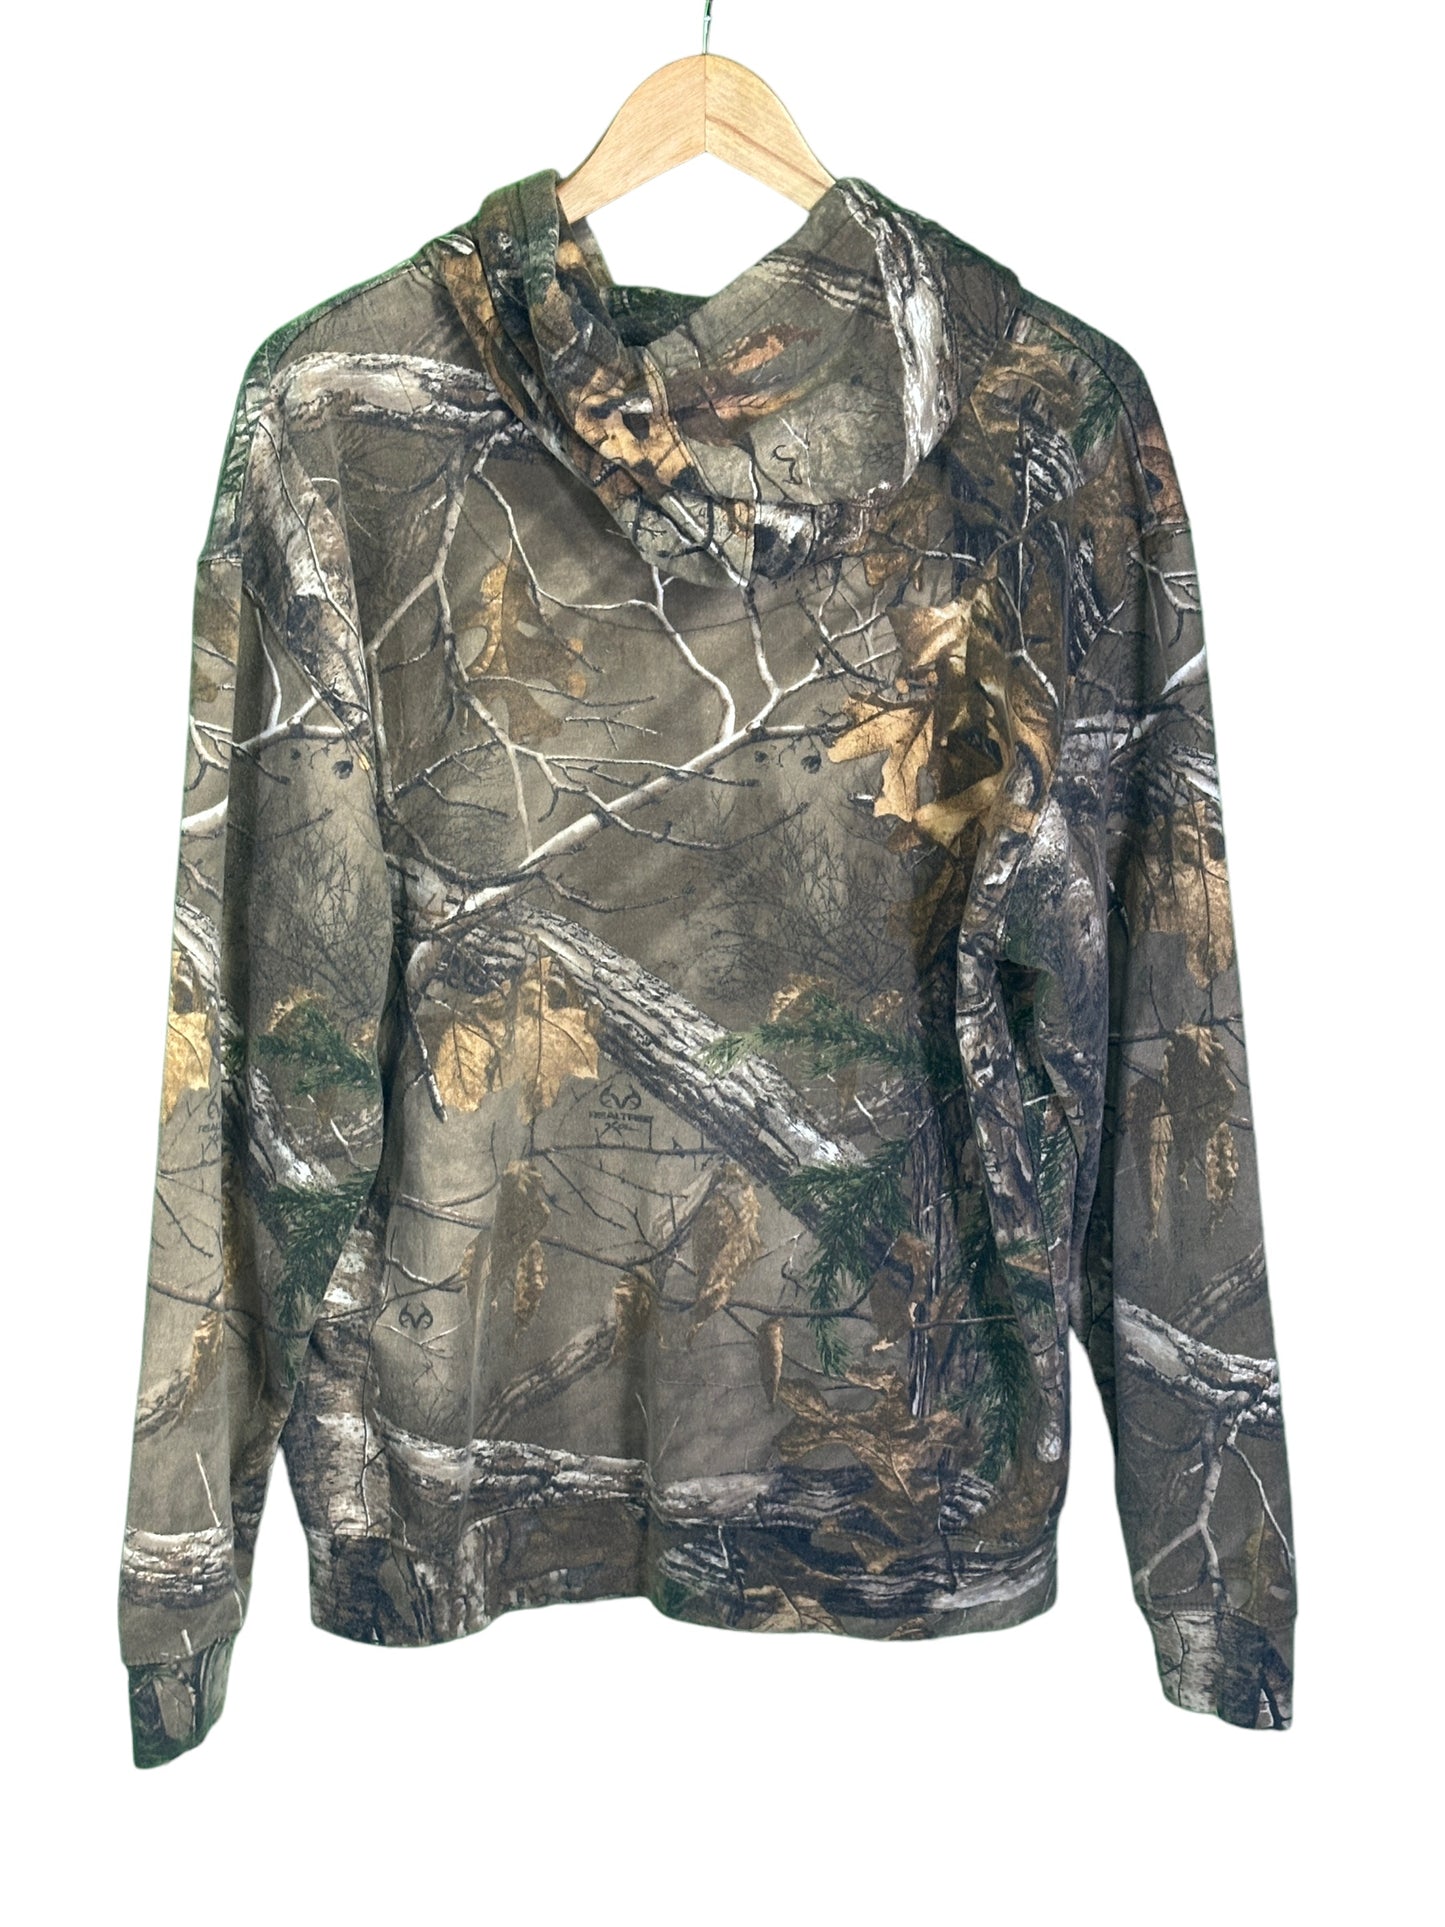 RealTree Hunters Woodland Camo Pullover Hoodie Size Medium